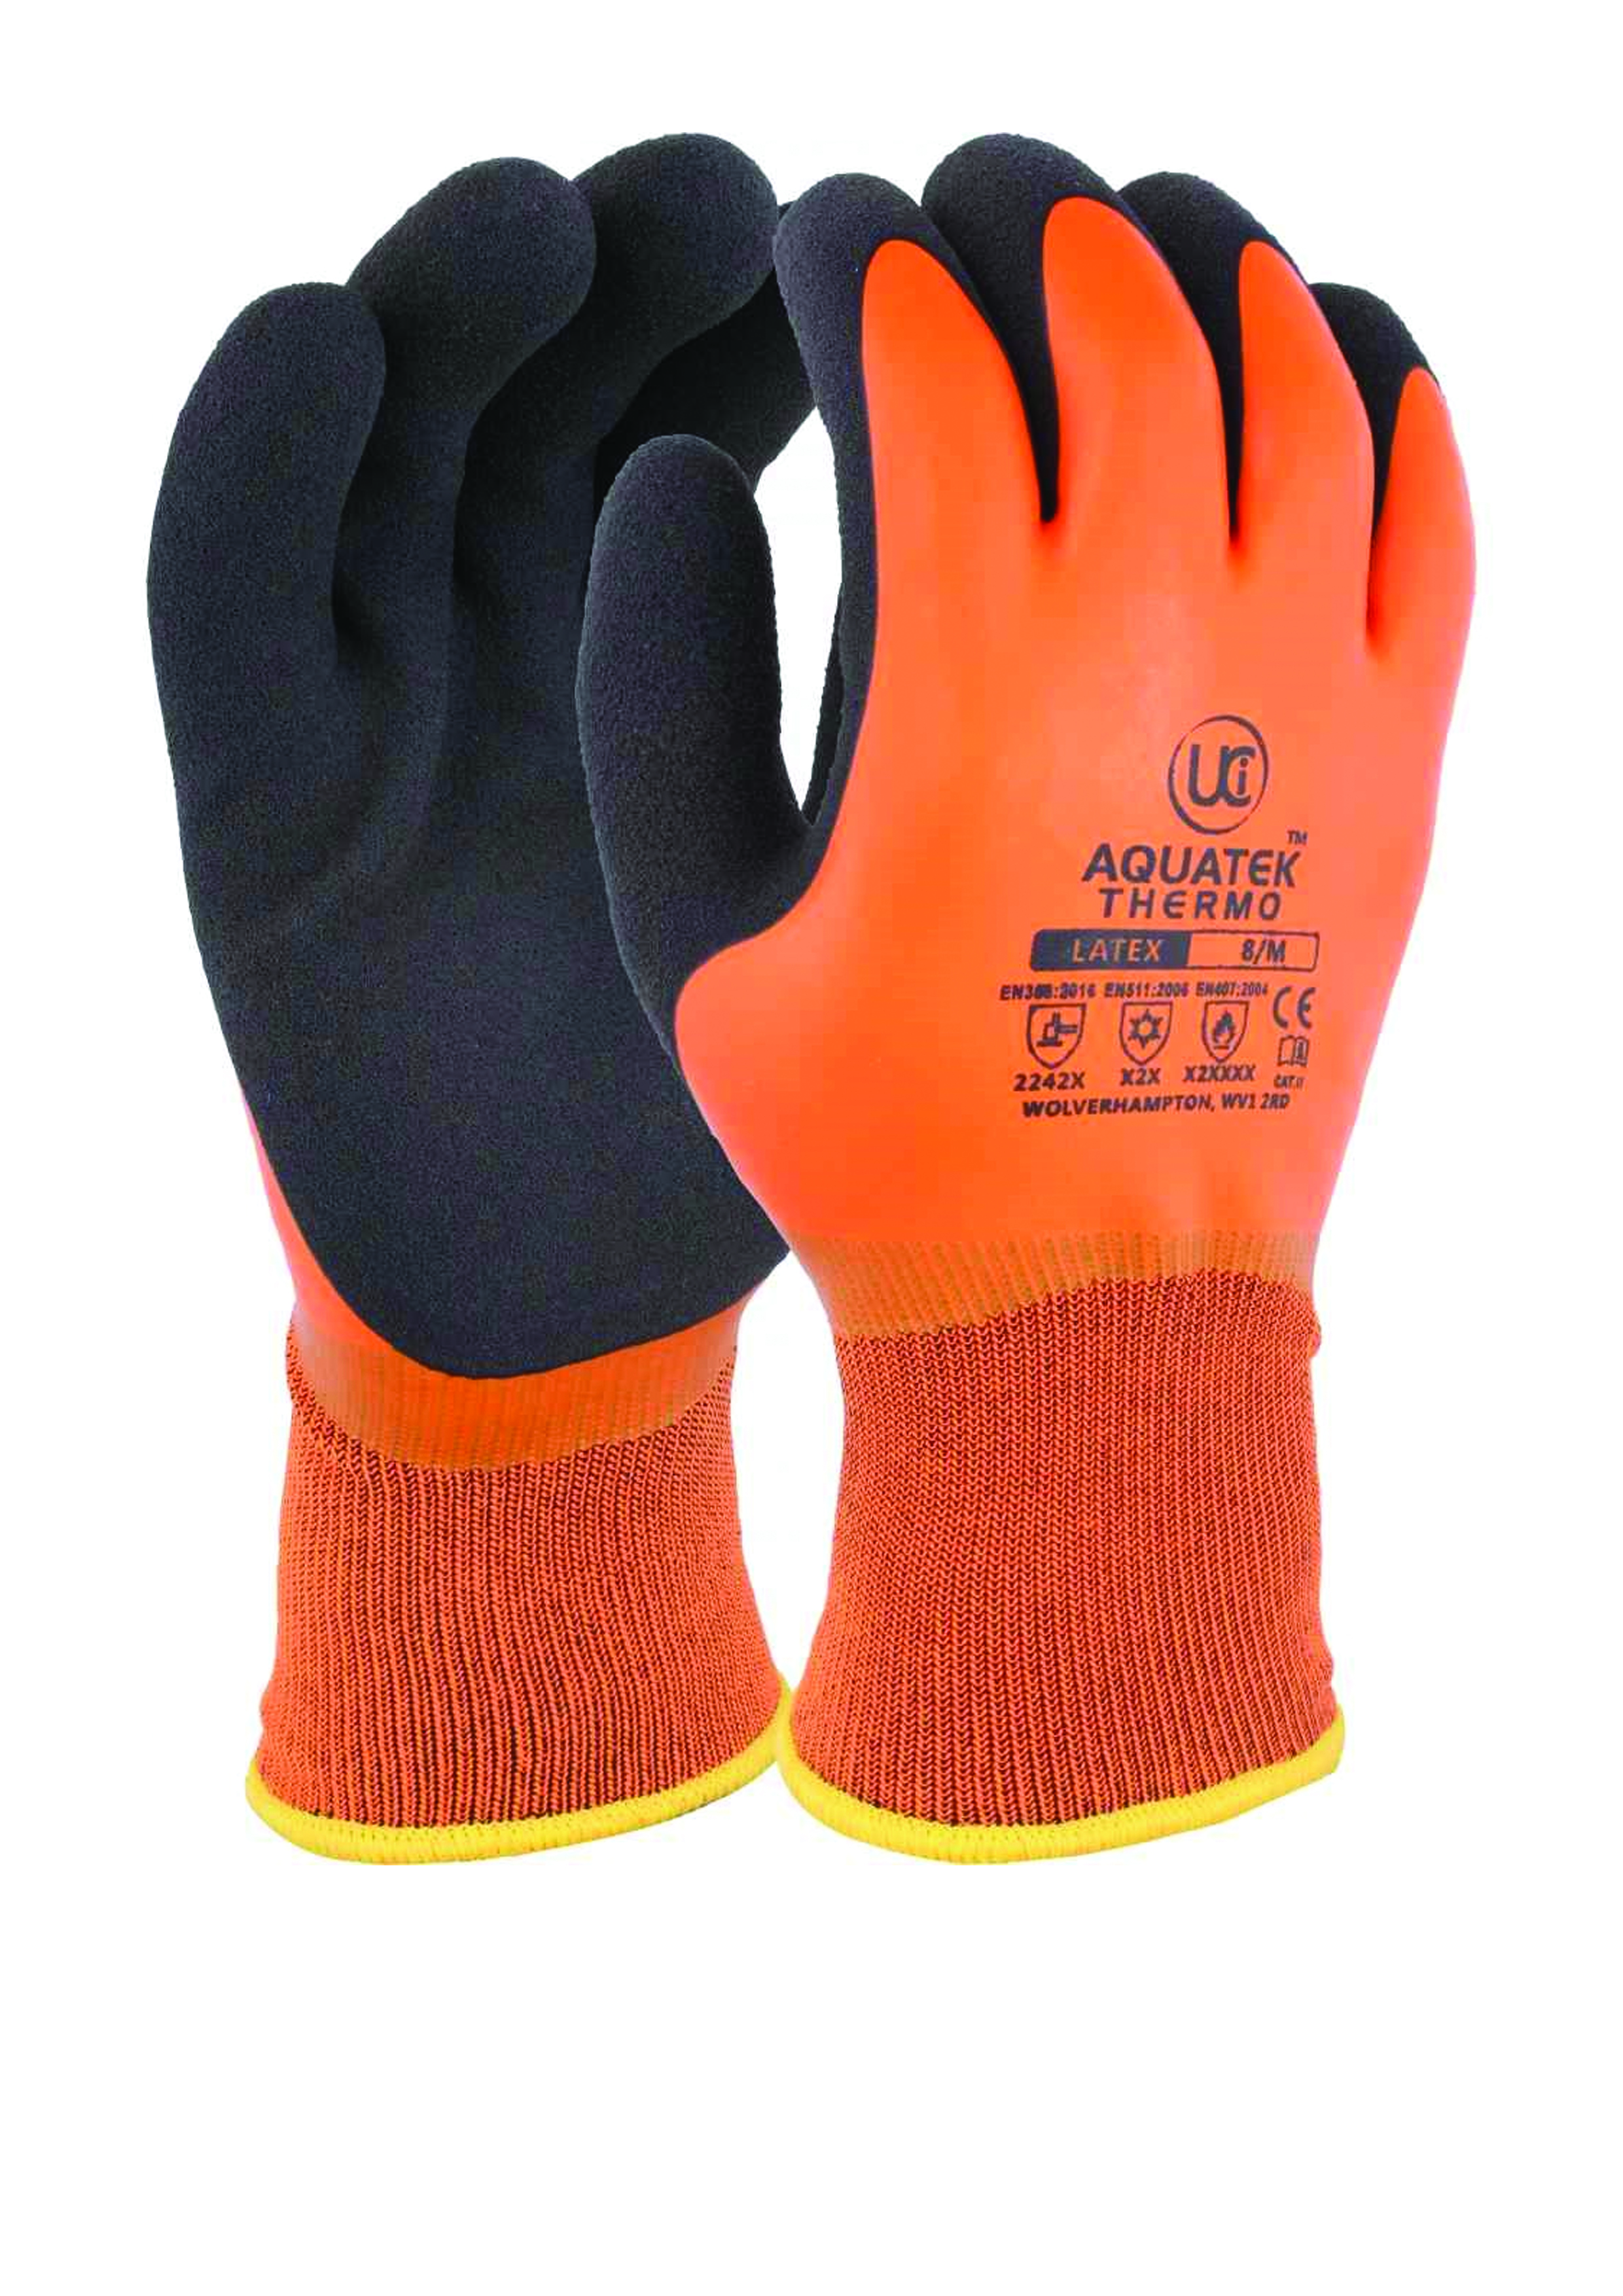 Aquatek Thermo Orange Glove XLarge (10)